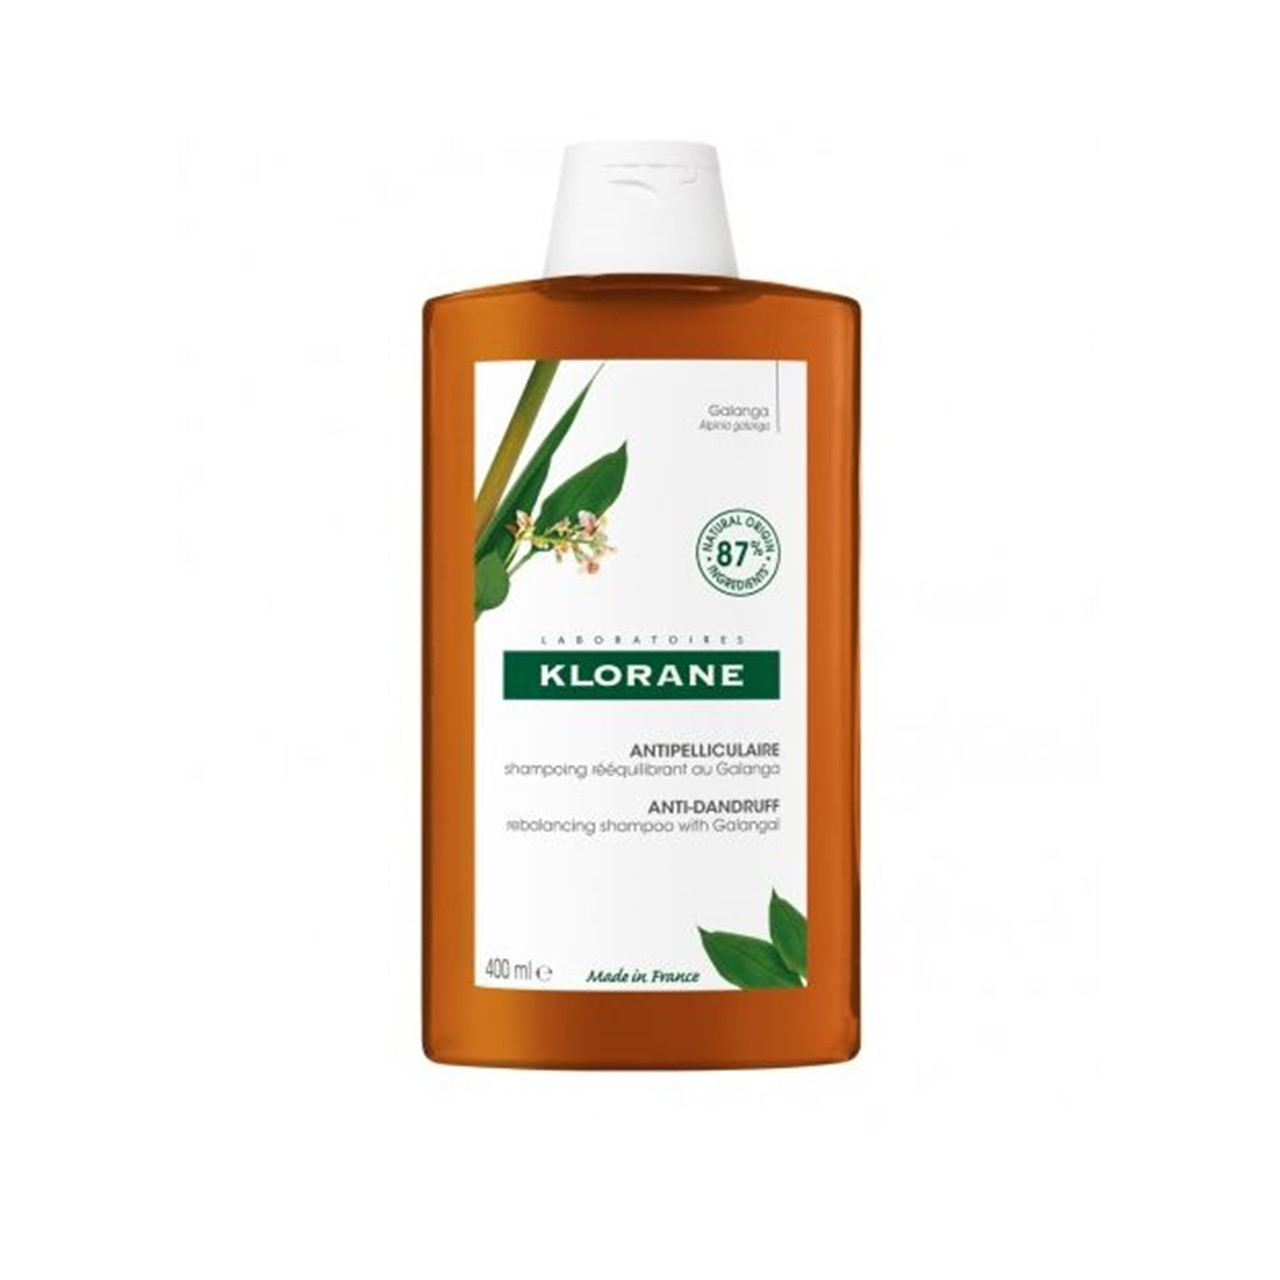 Klorane Anti-Dandruff Rebalancing Shampoo with Galangal 400ml